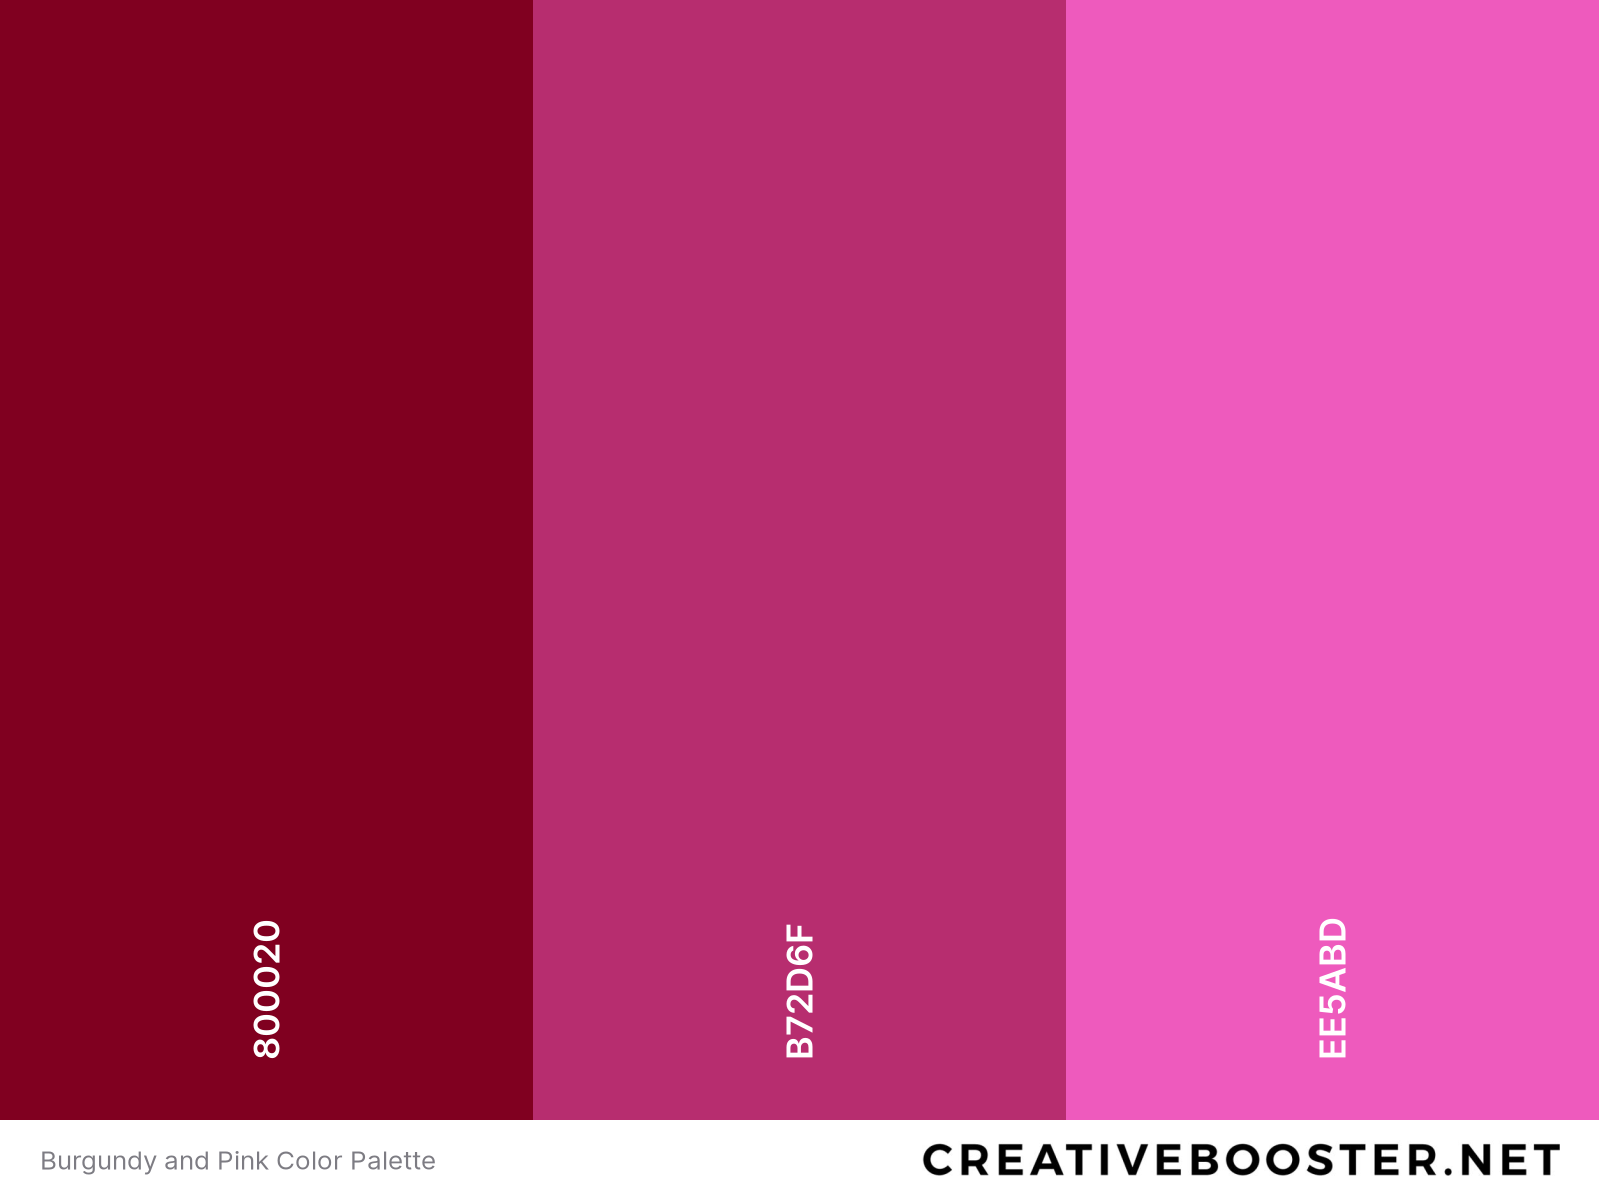 Burgundy and Pink Color Palette